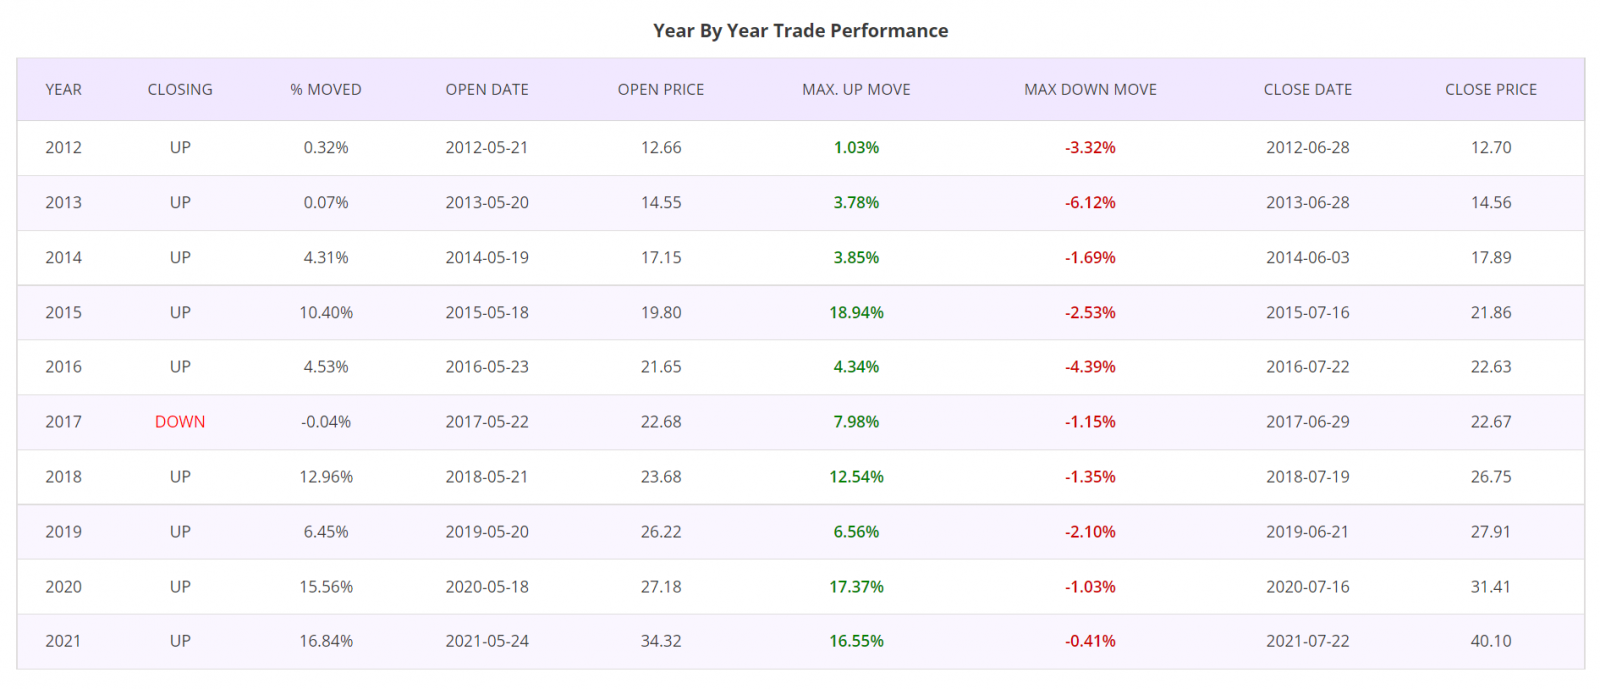 Swing trading seasonality trading year by year trade performance